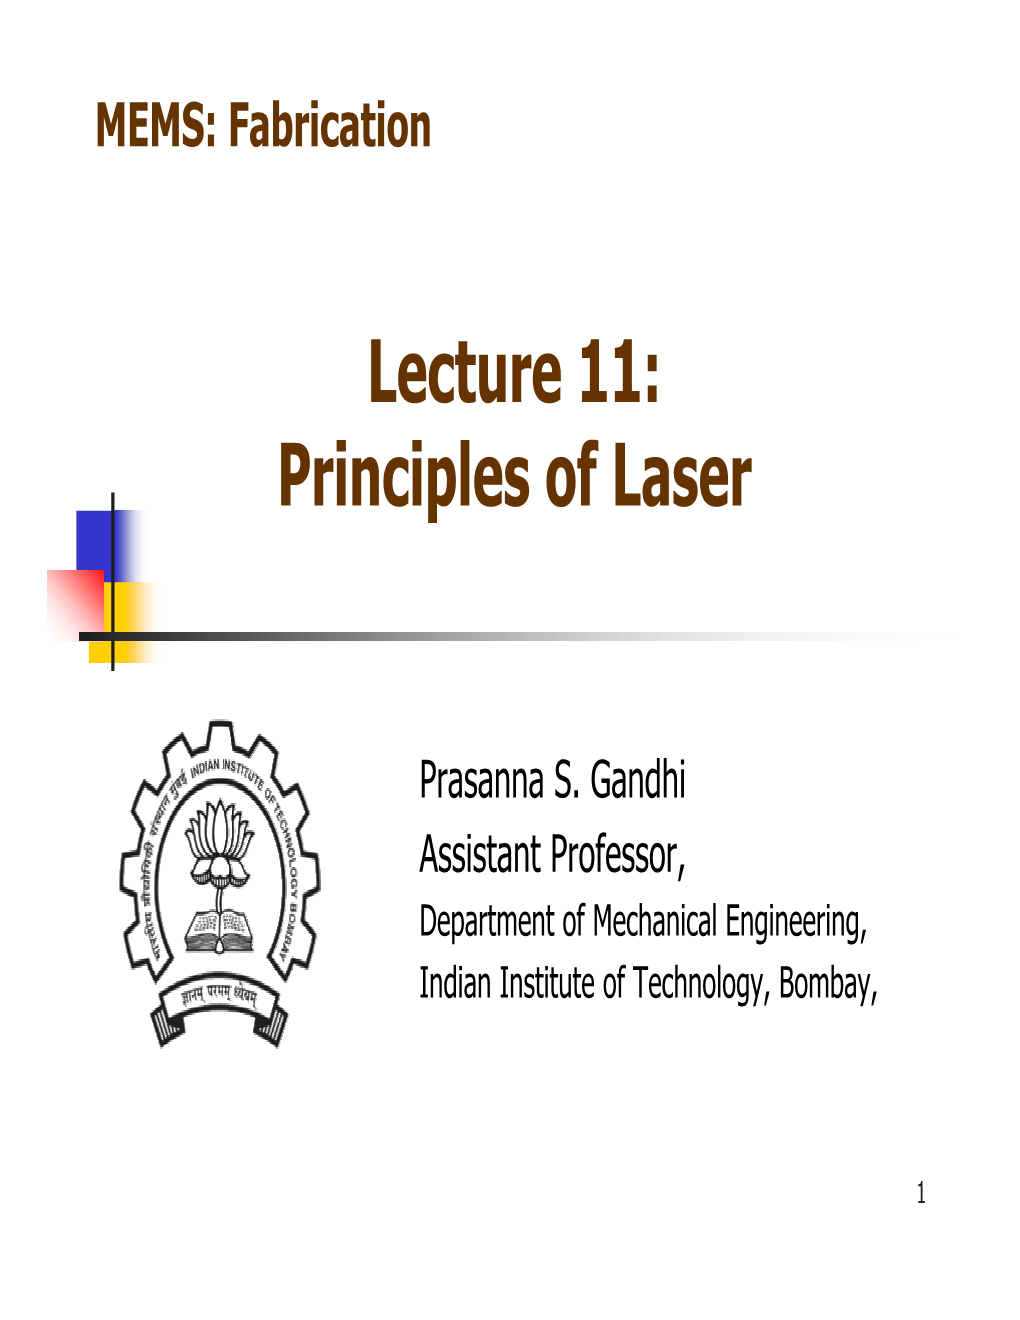 Principles of Laser